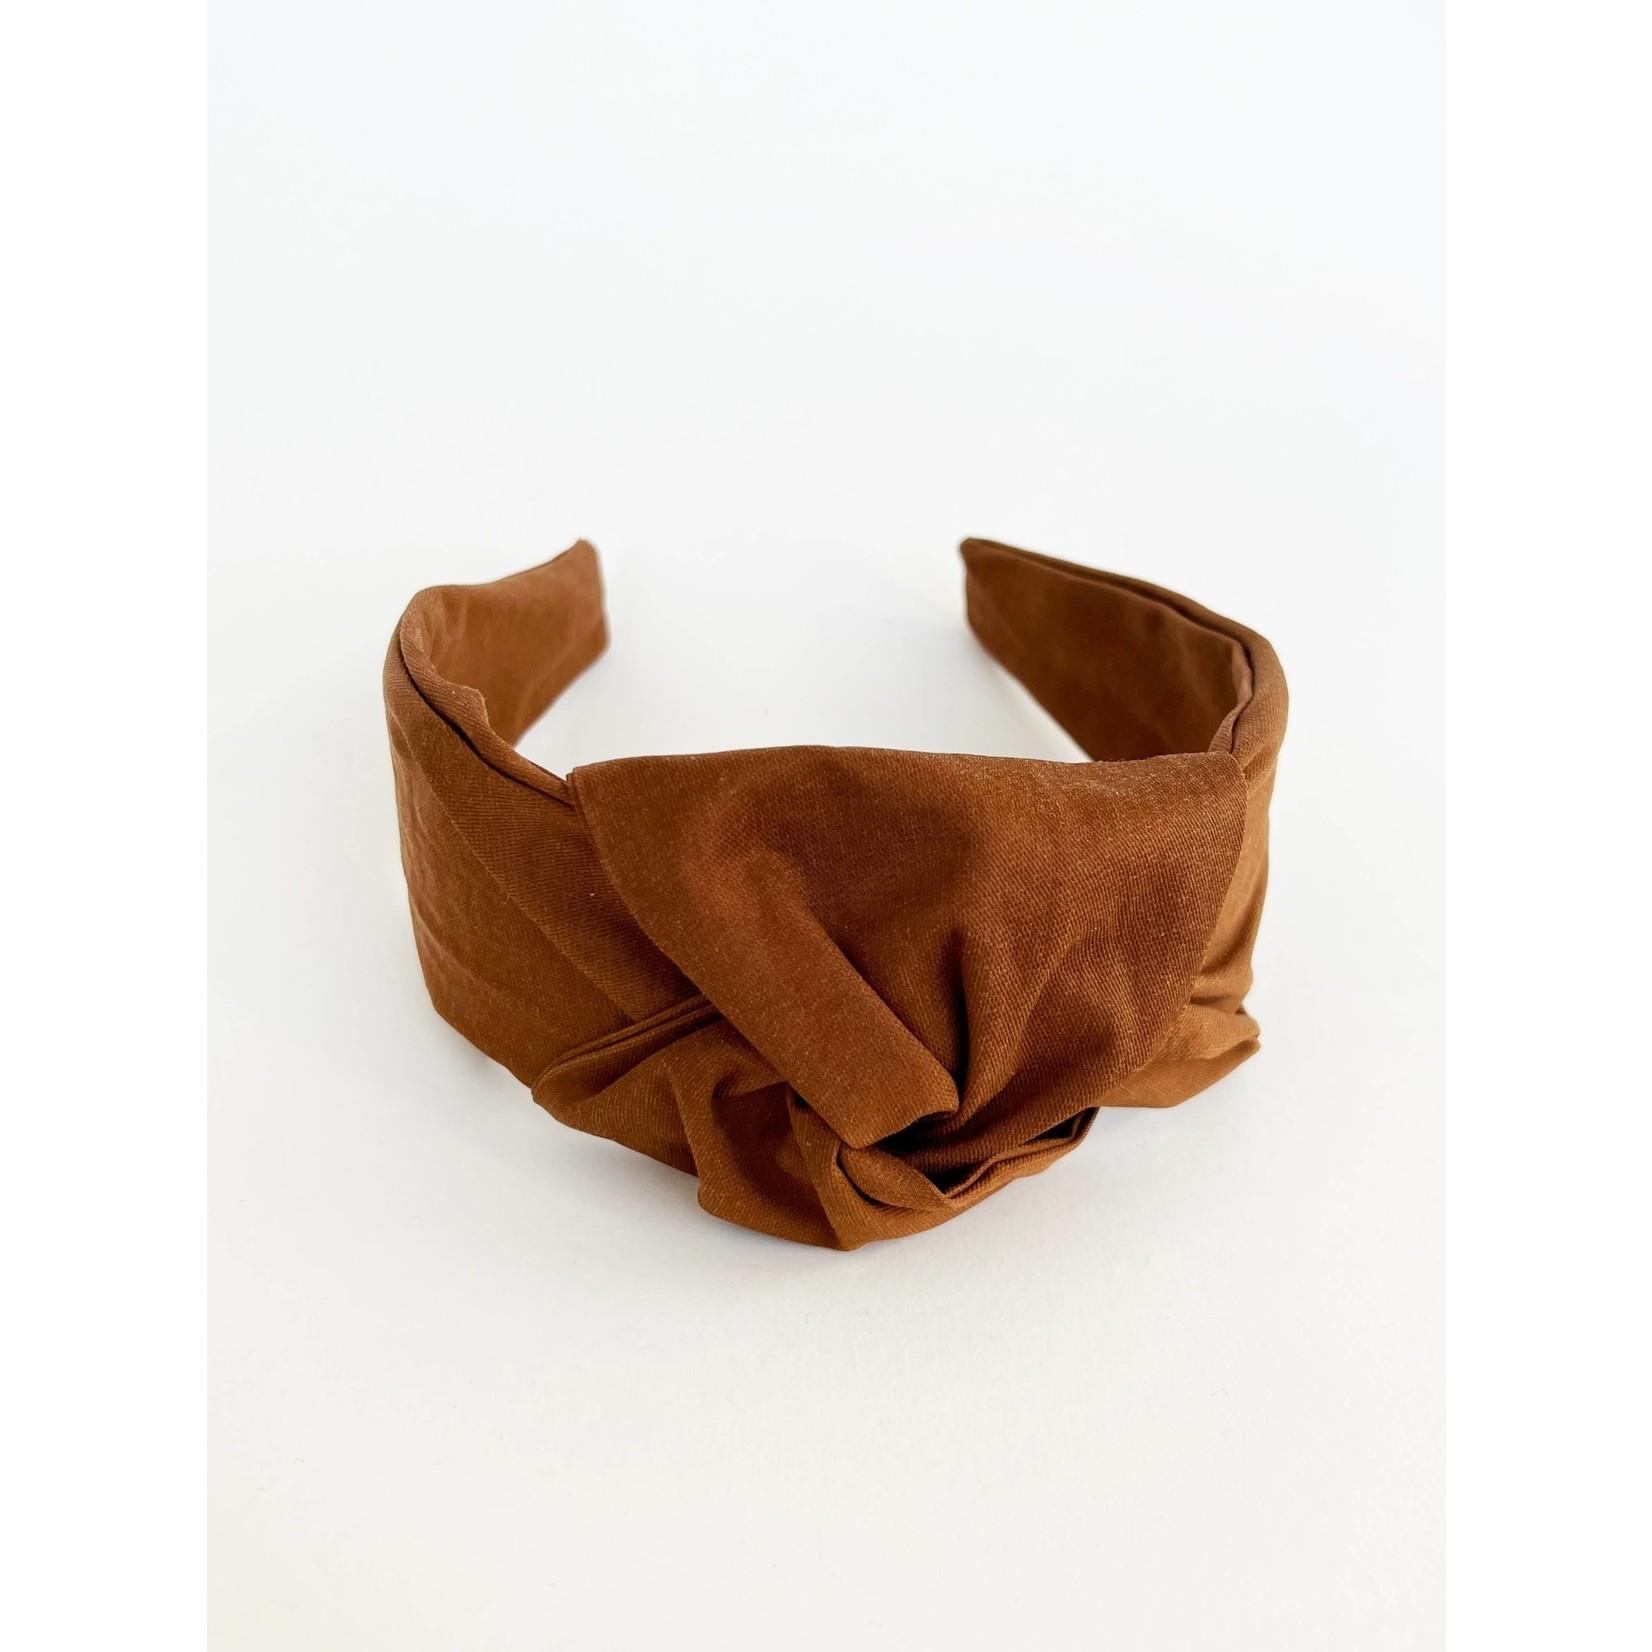 Poppy Knot Headband in Brown